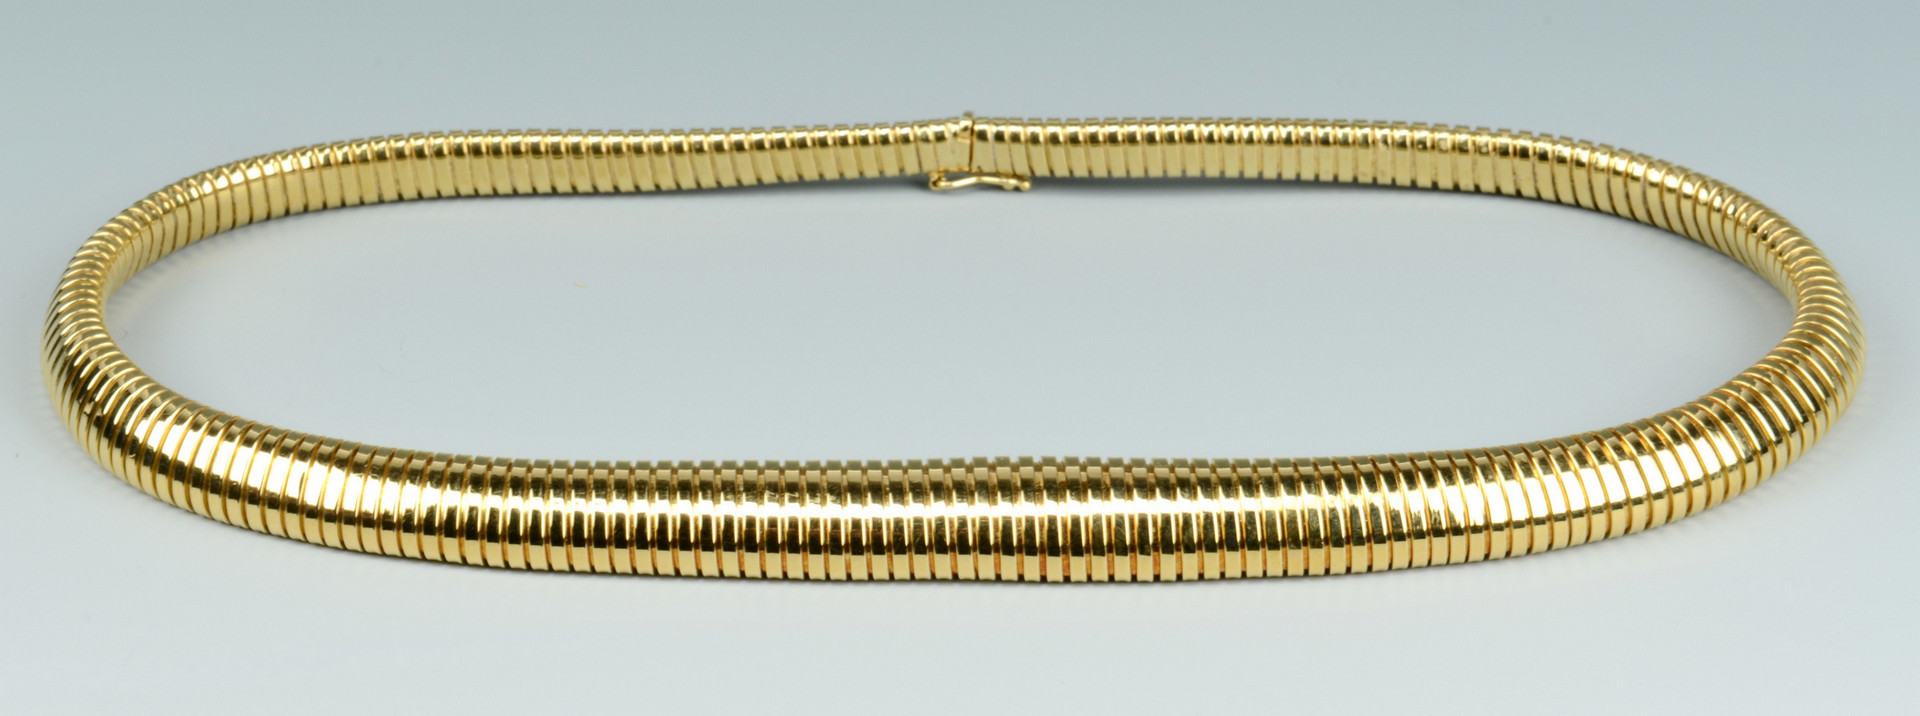 Lot 107: 18k Gold Graduated Collar Necklace, 43.4 grams